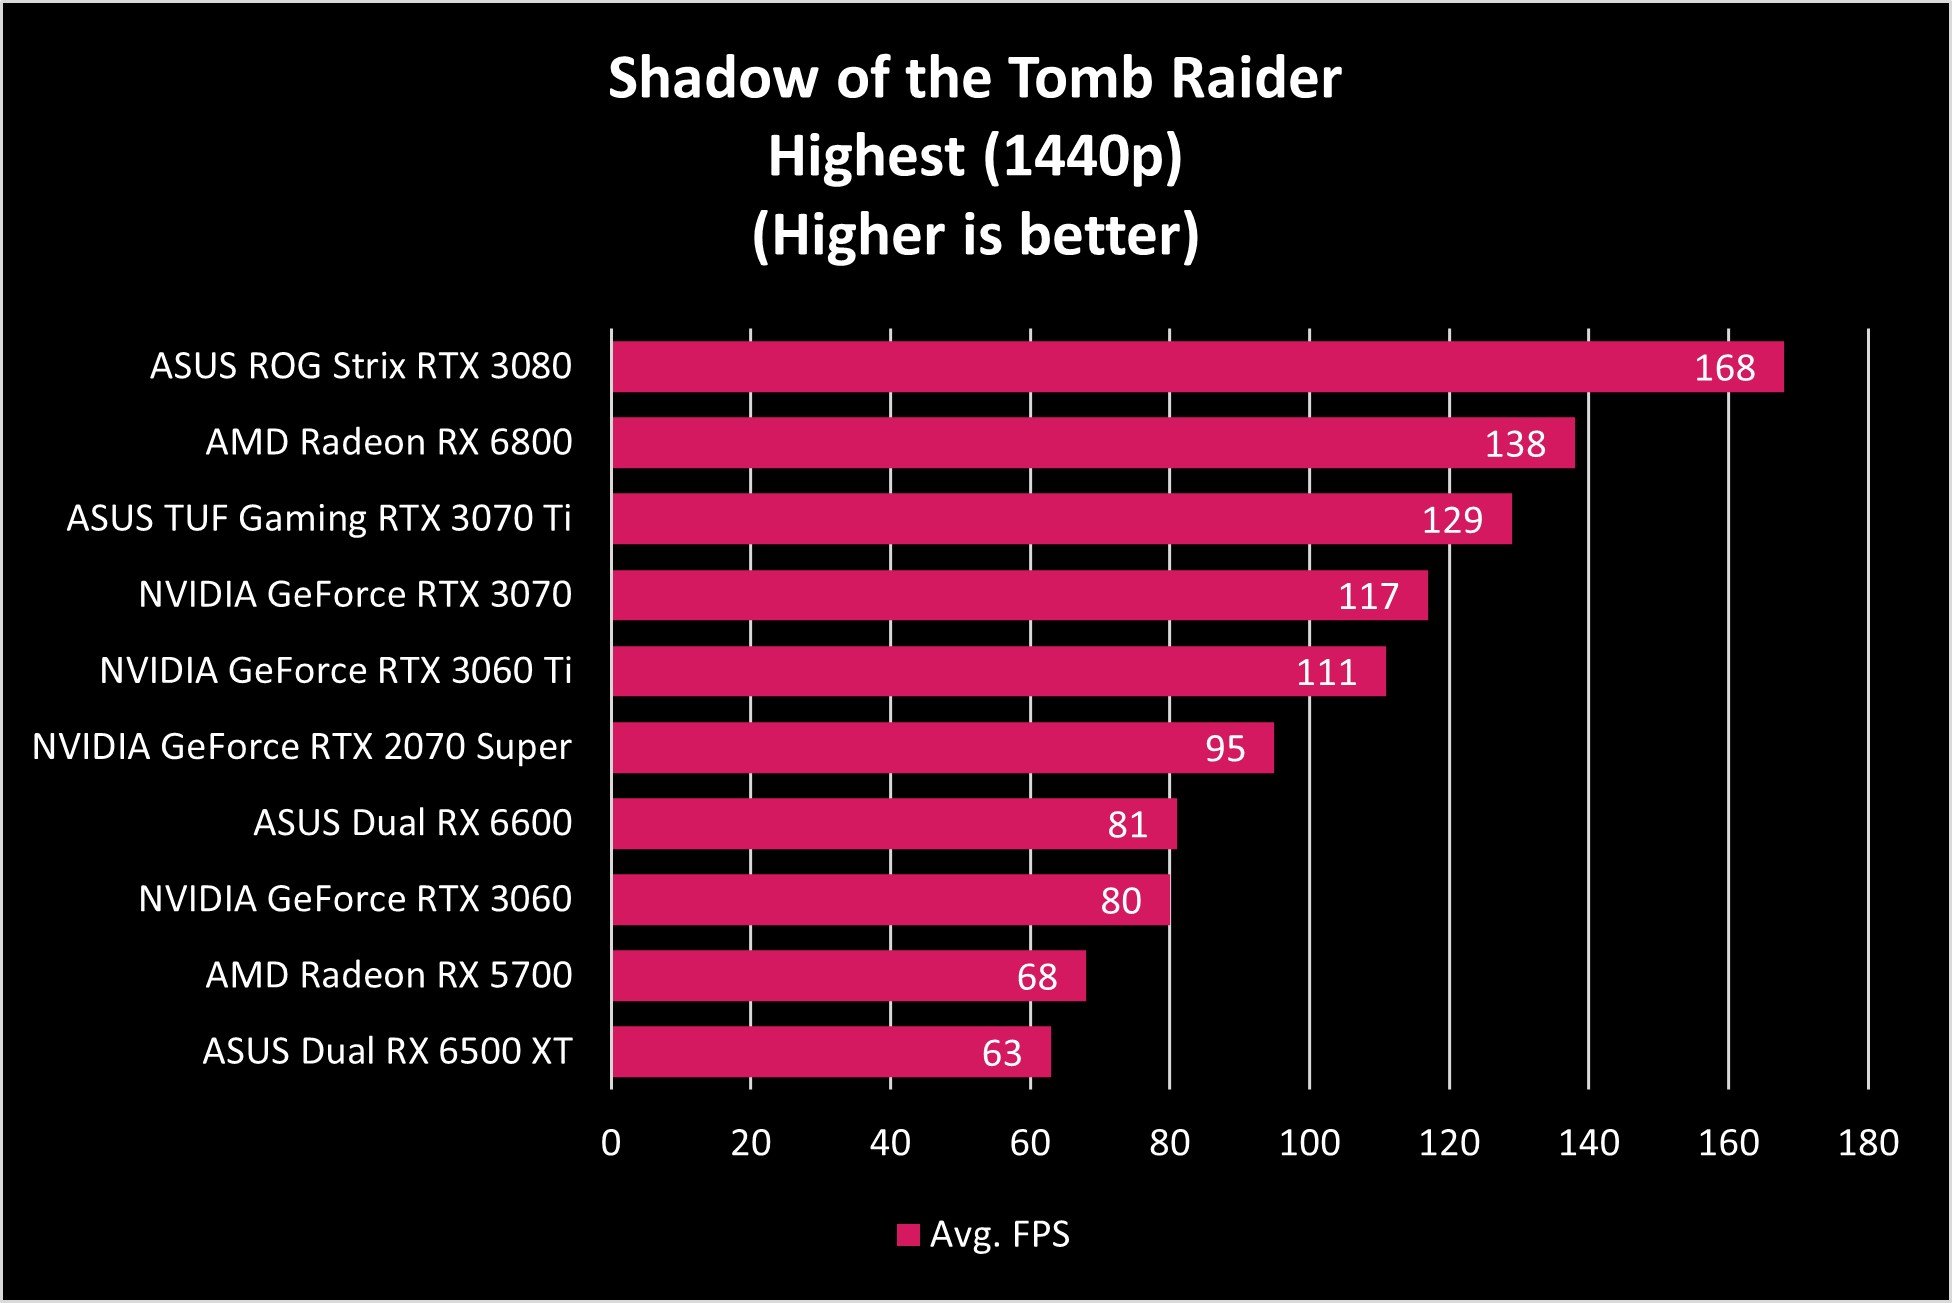 Asus Dual Rx 6500 Xt Tomb Raider Graph